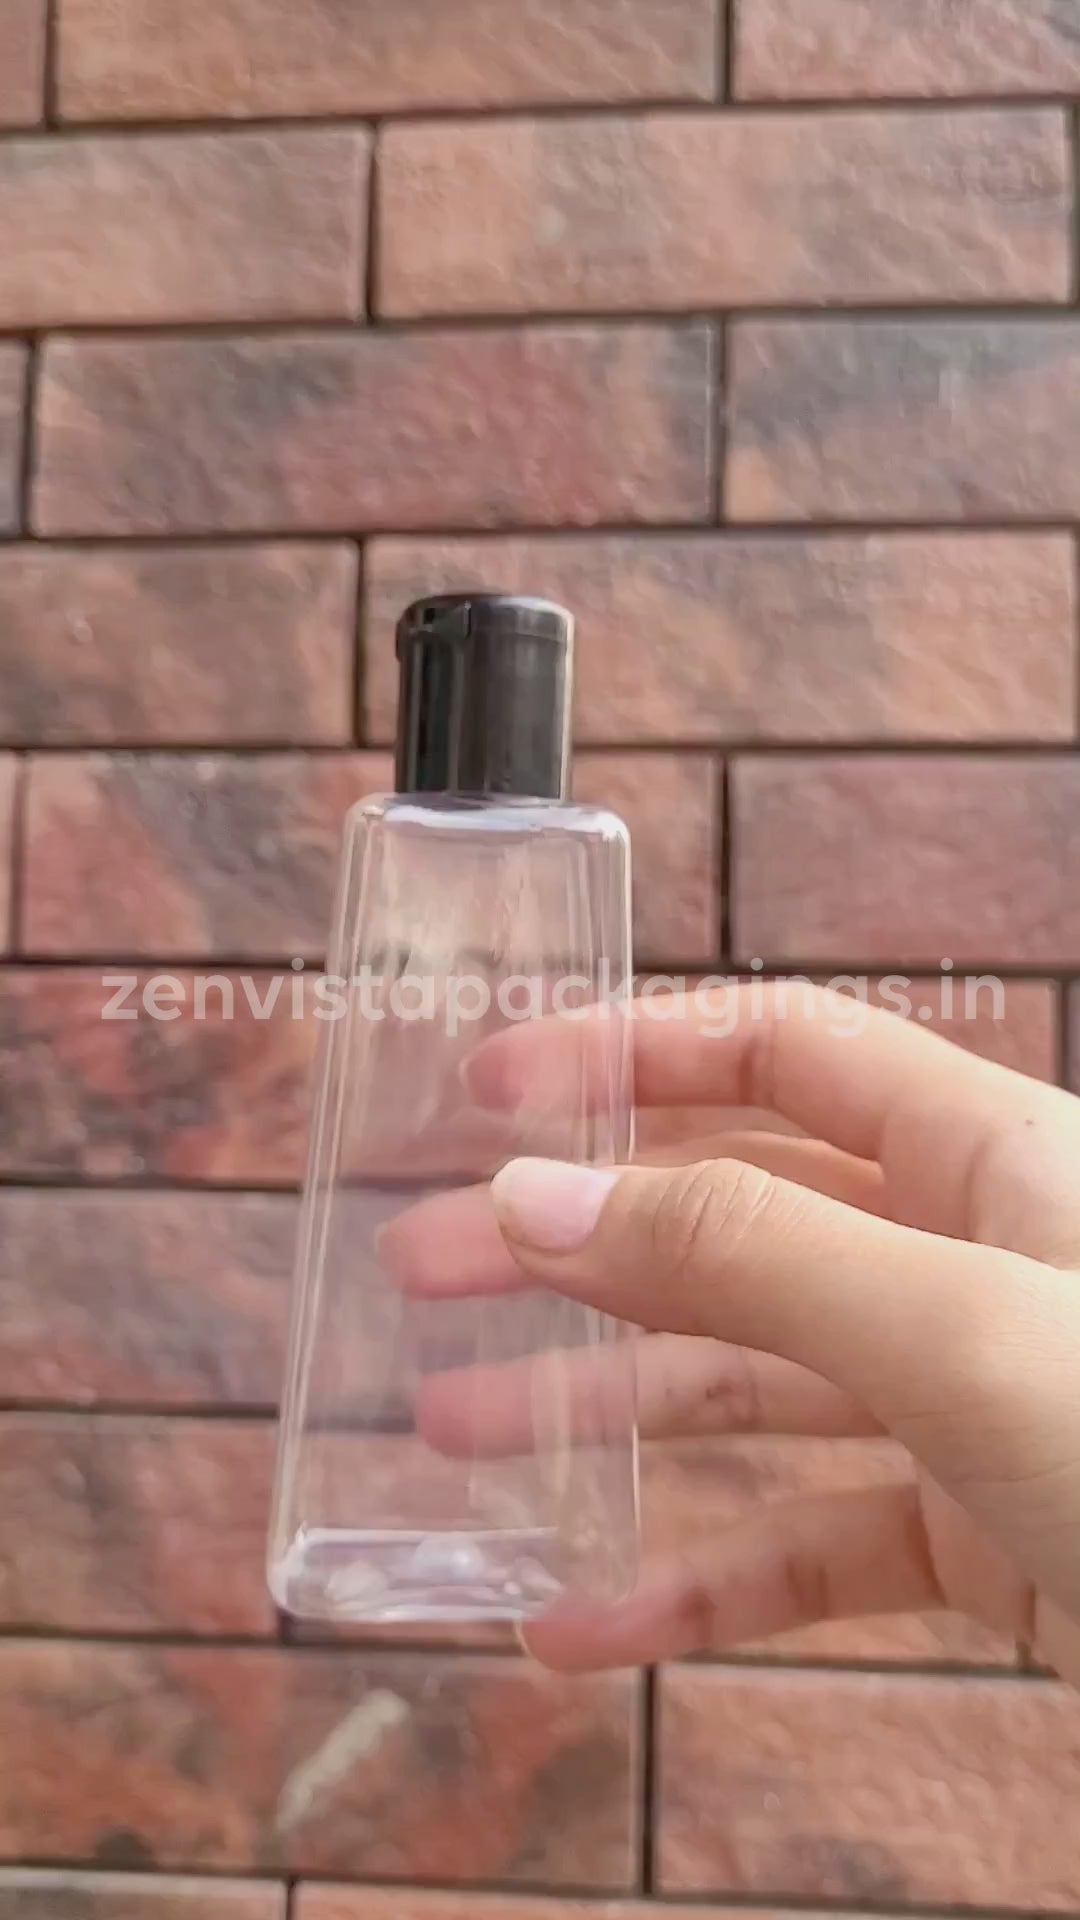 Pyramid Shape Clear Transparent Pet Bottle With Black Fliptop Cap 100ml [ZMT90]